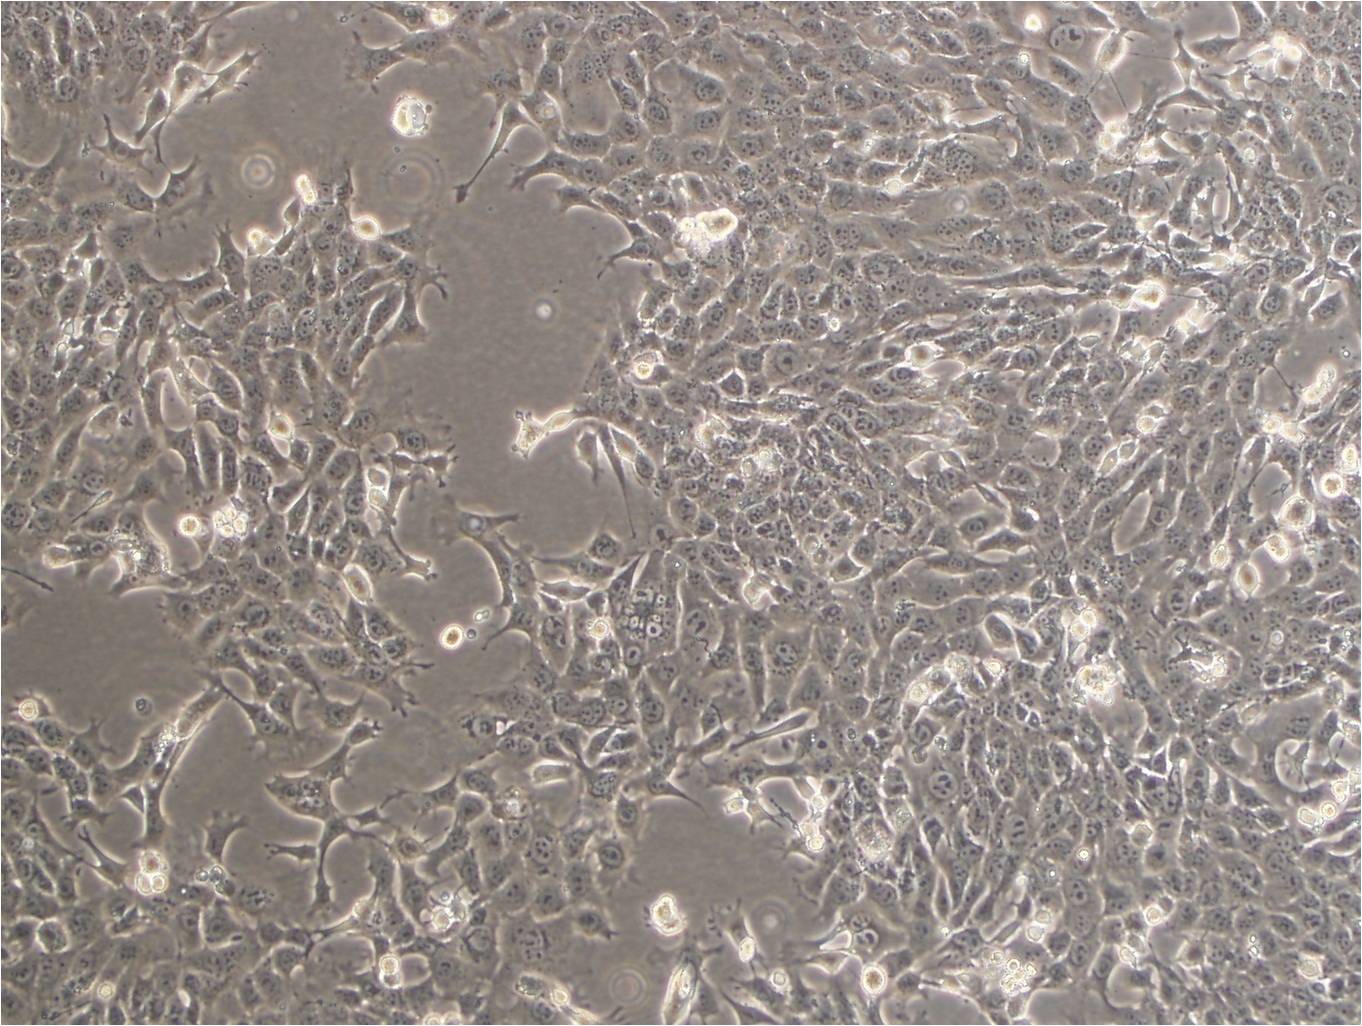 H19-7 epithelioid cells大鼠海马神经元细胞系